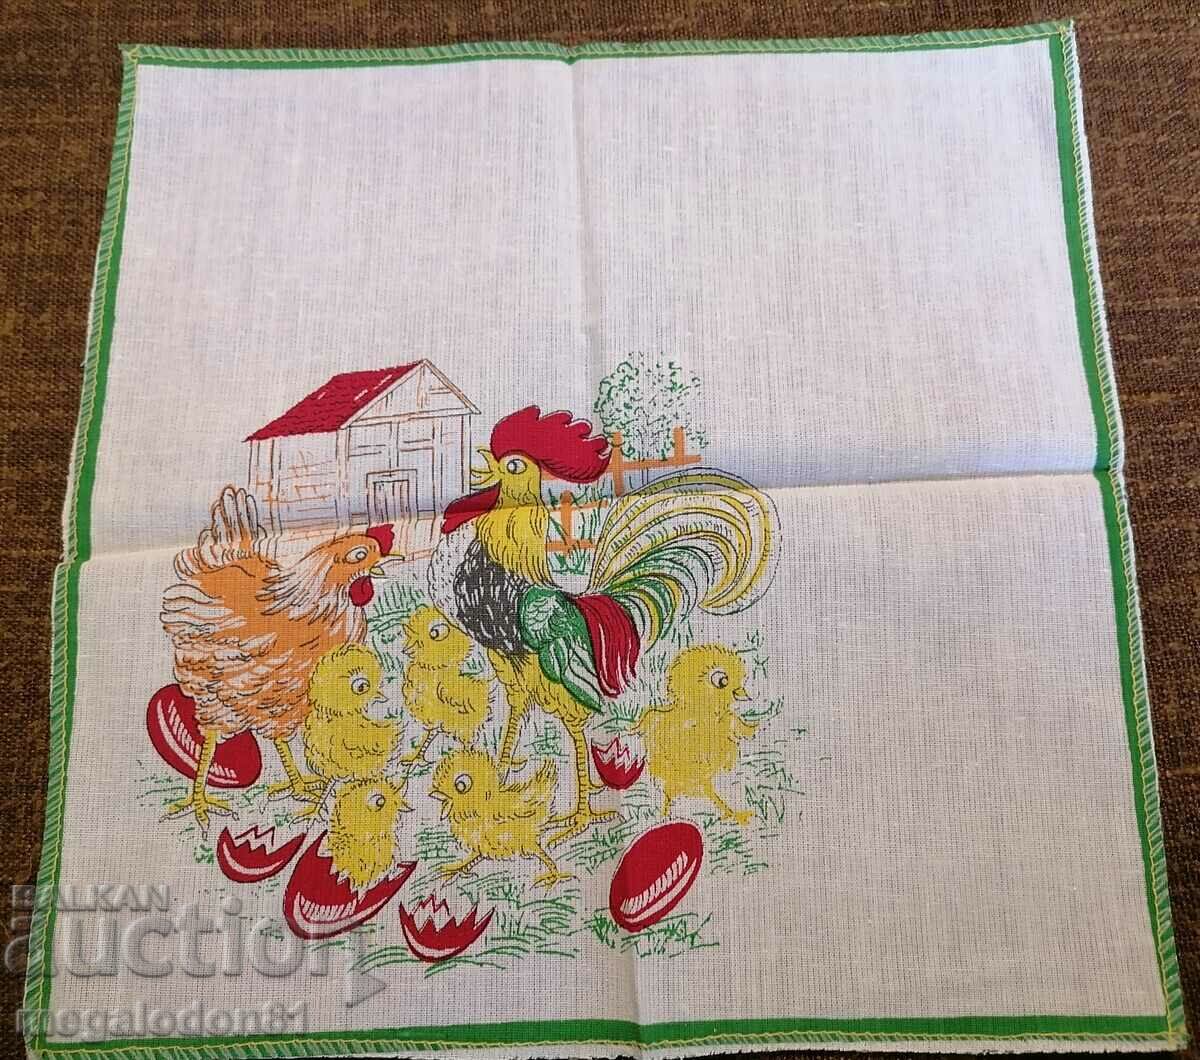 Old handkerchief, Easter motifs